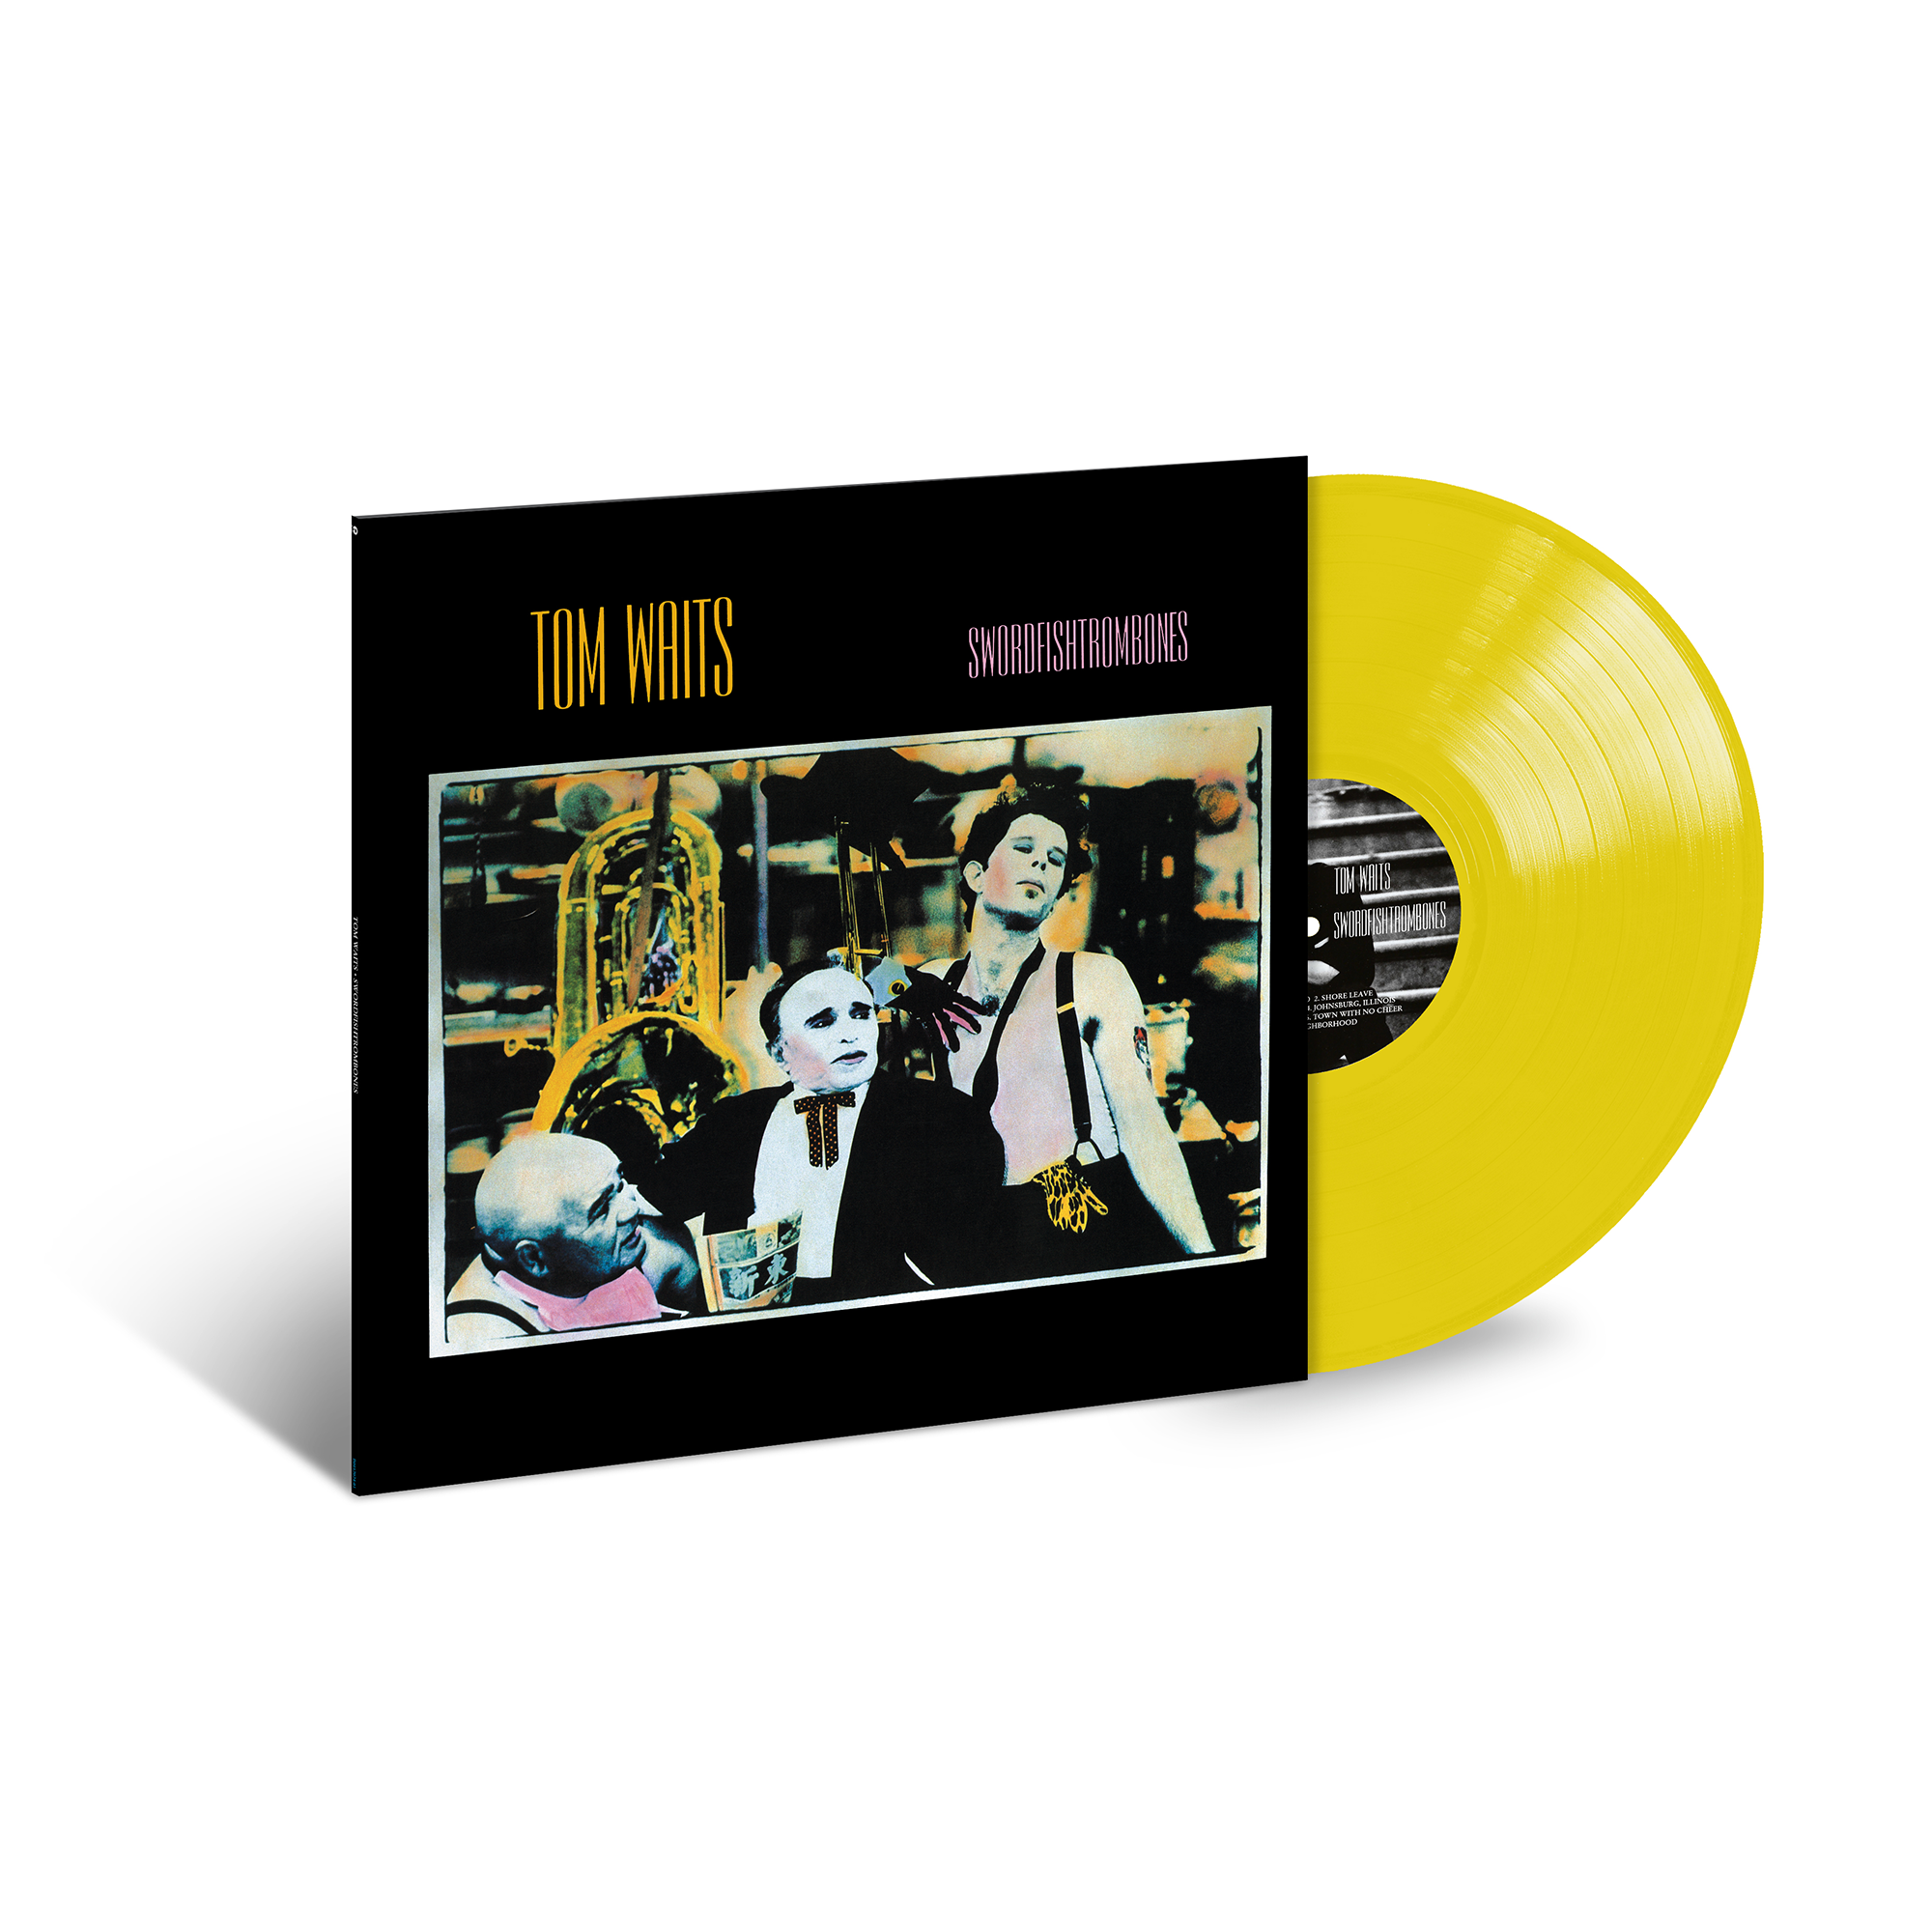 Tom Waits - Swordfishtrombones: Limited Opaque Canary Yellow Vinyl LP